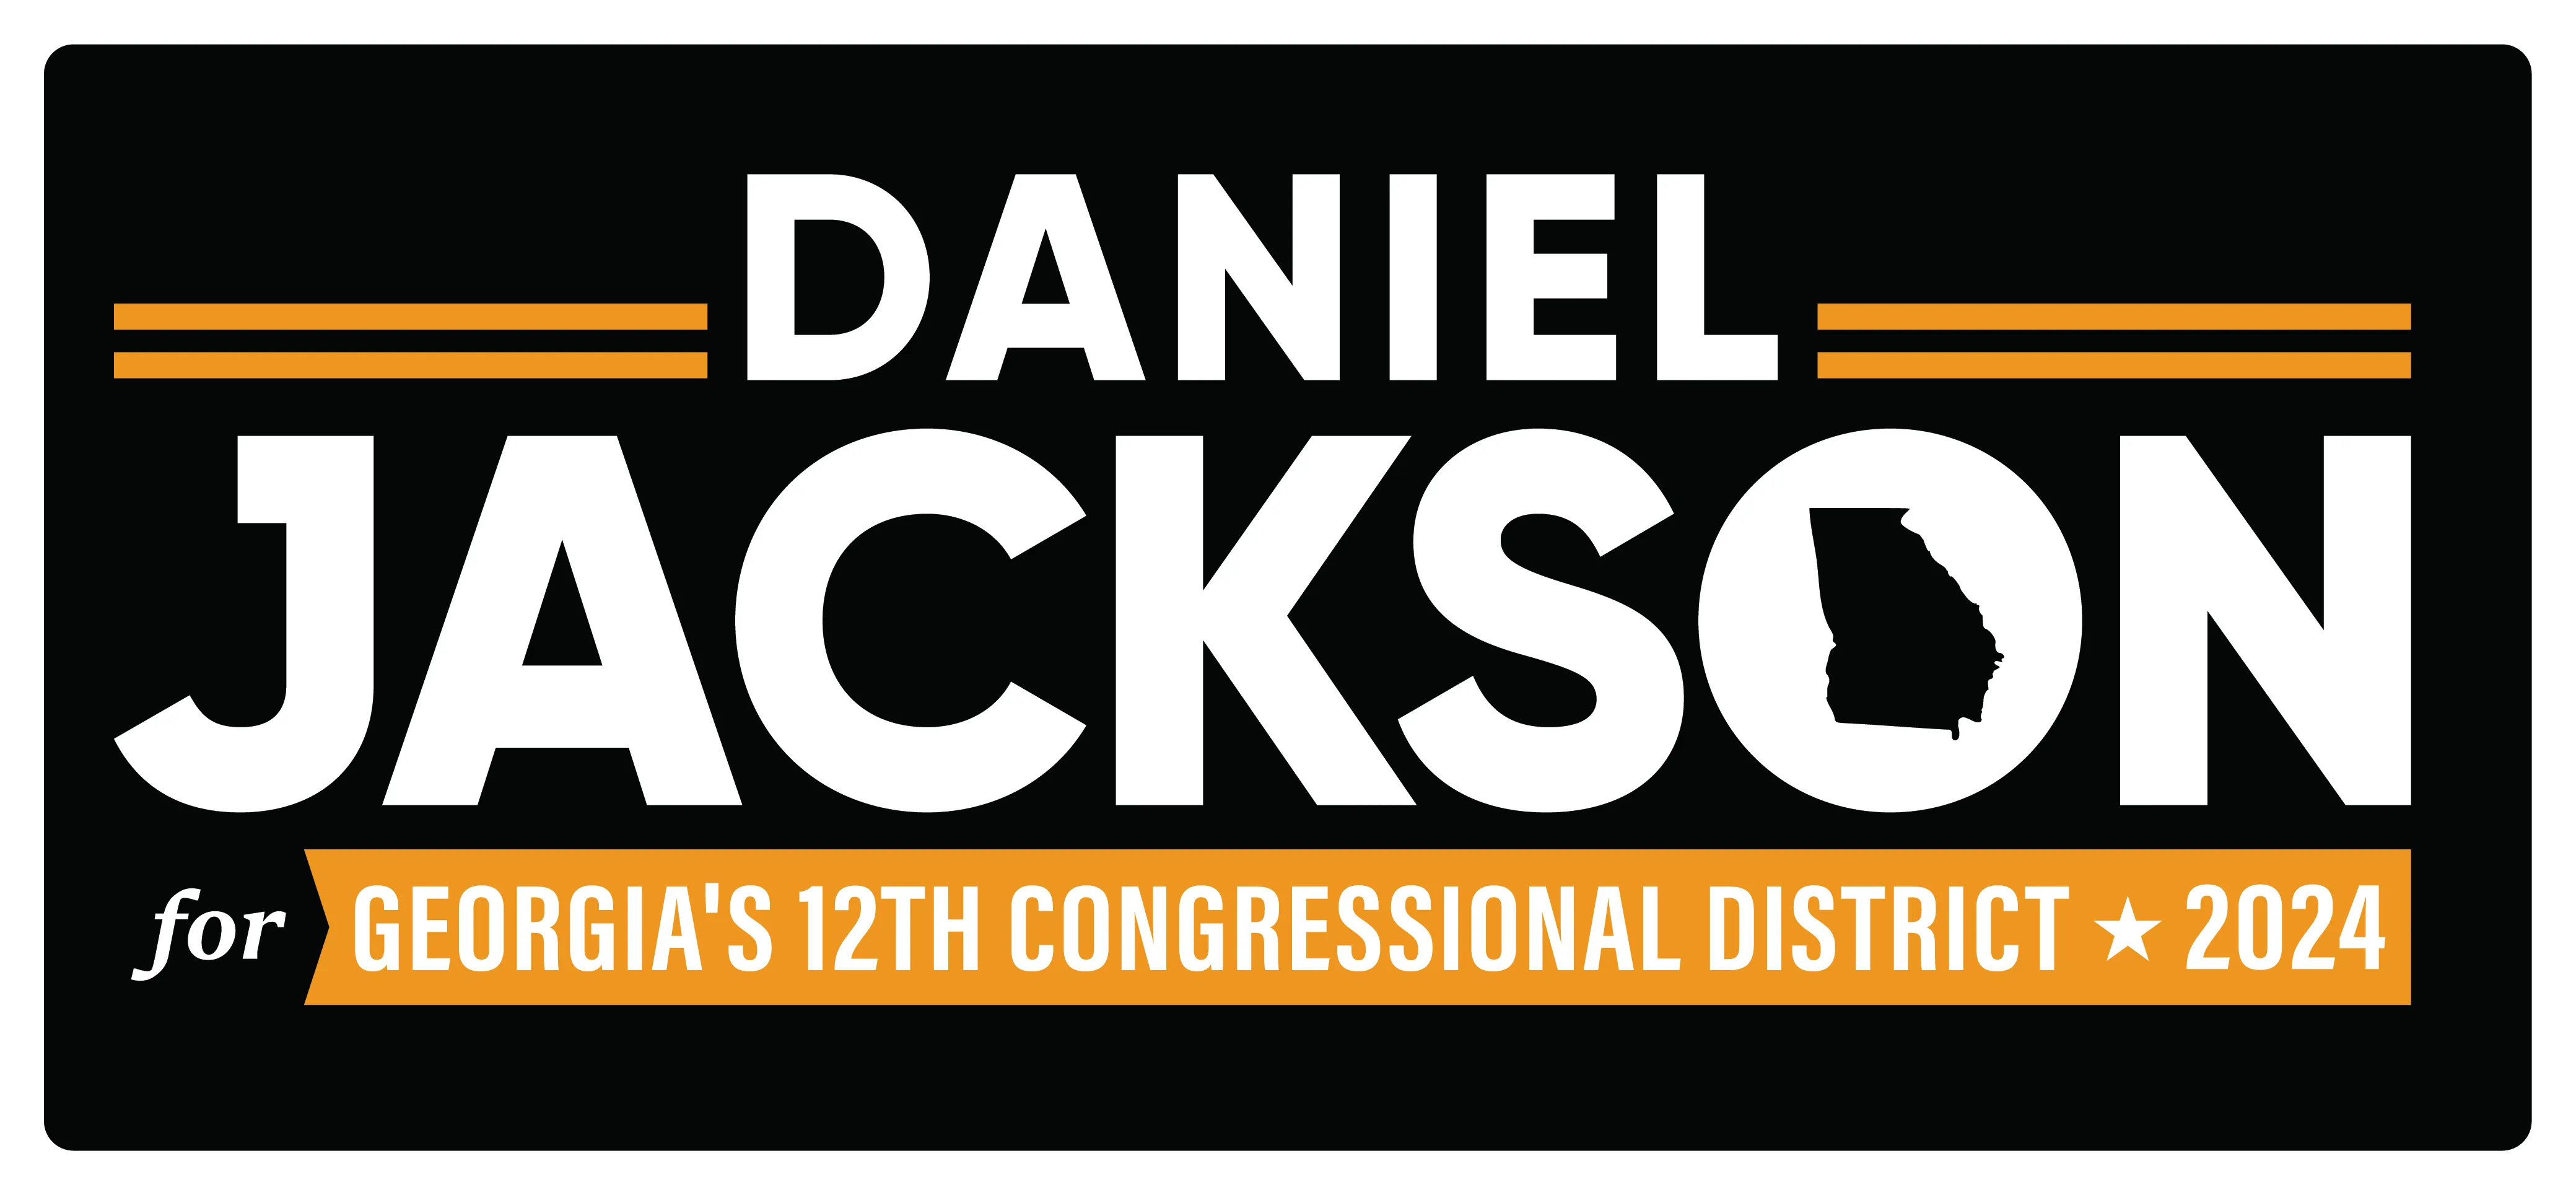 Daniel Jackson